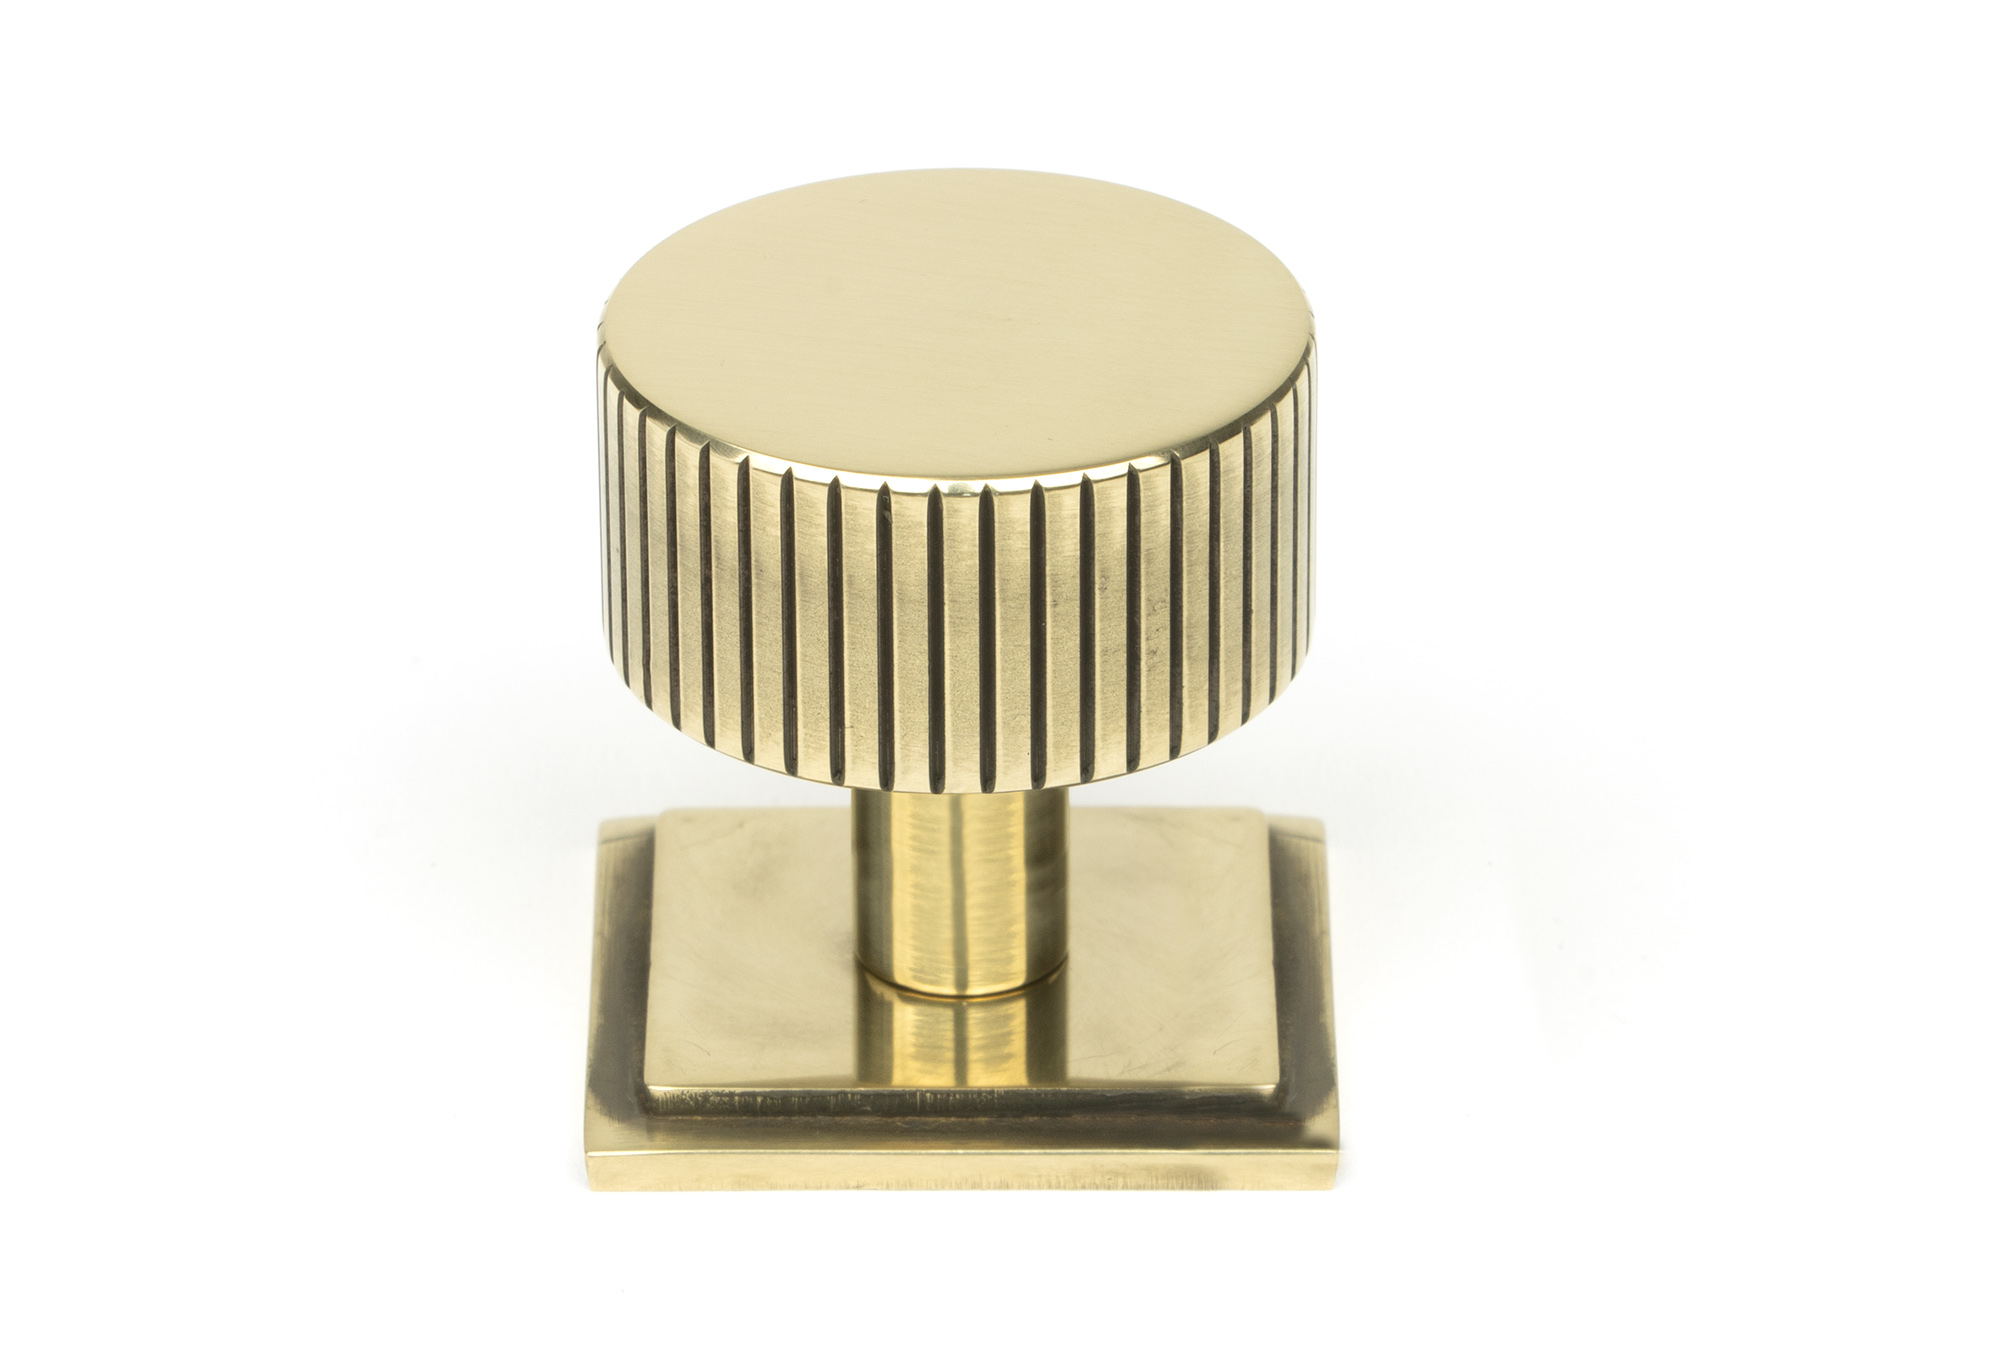 Aged Brass Judd Cabinet Knob - 32mm (Square)